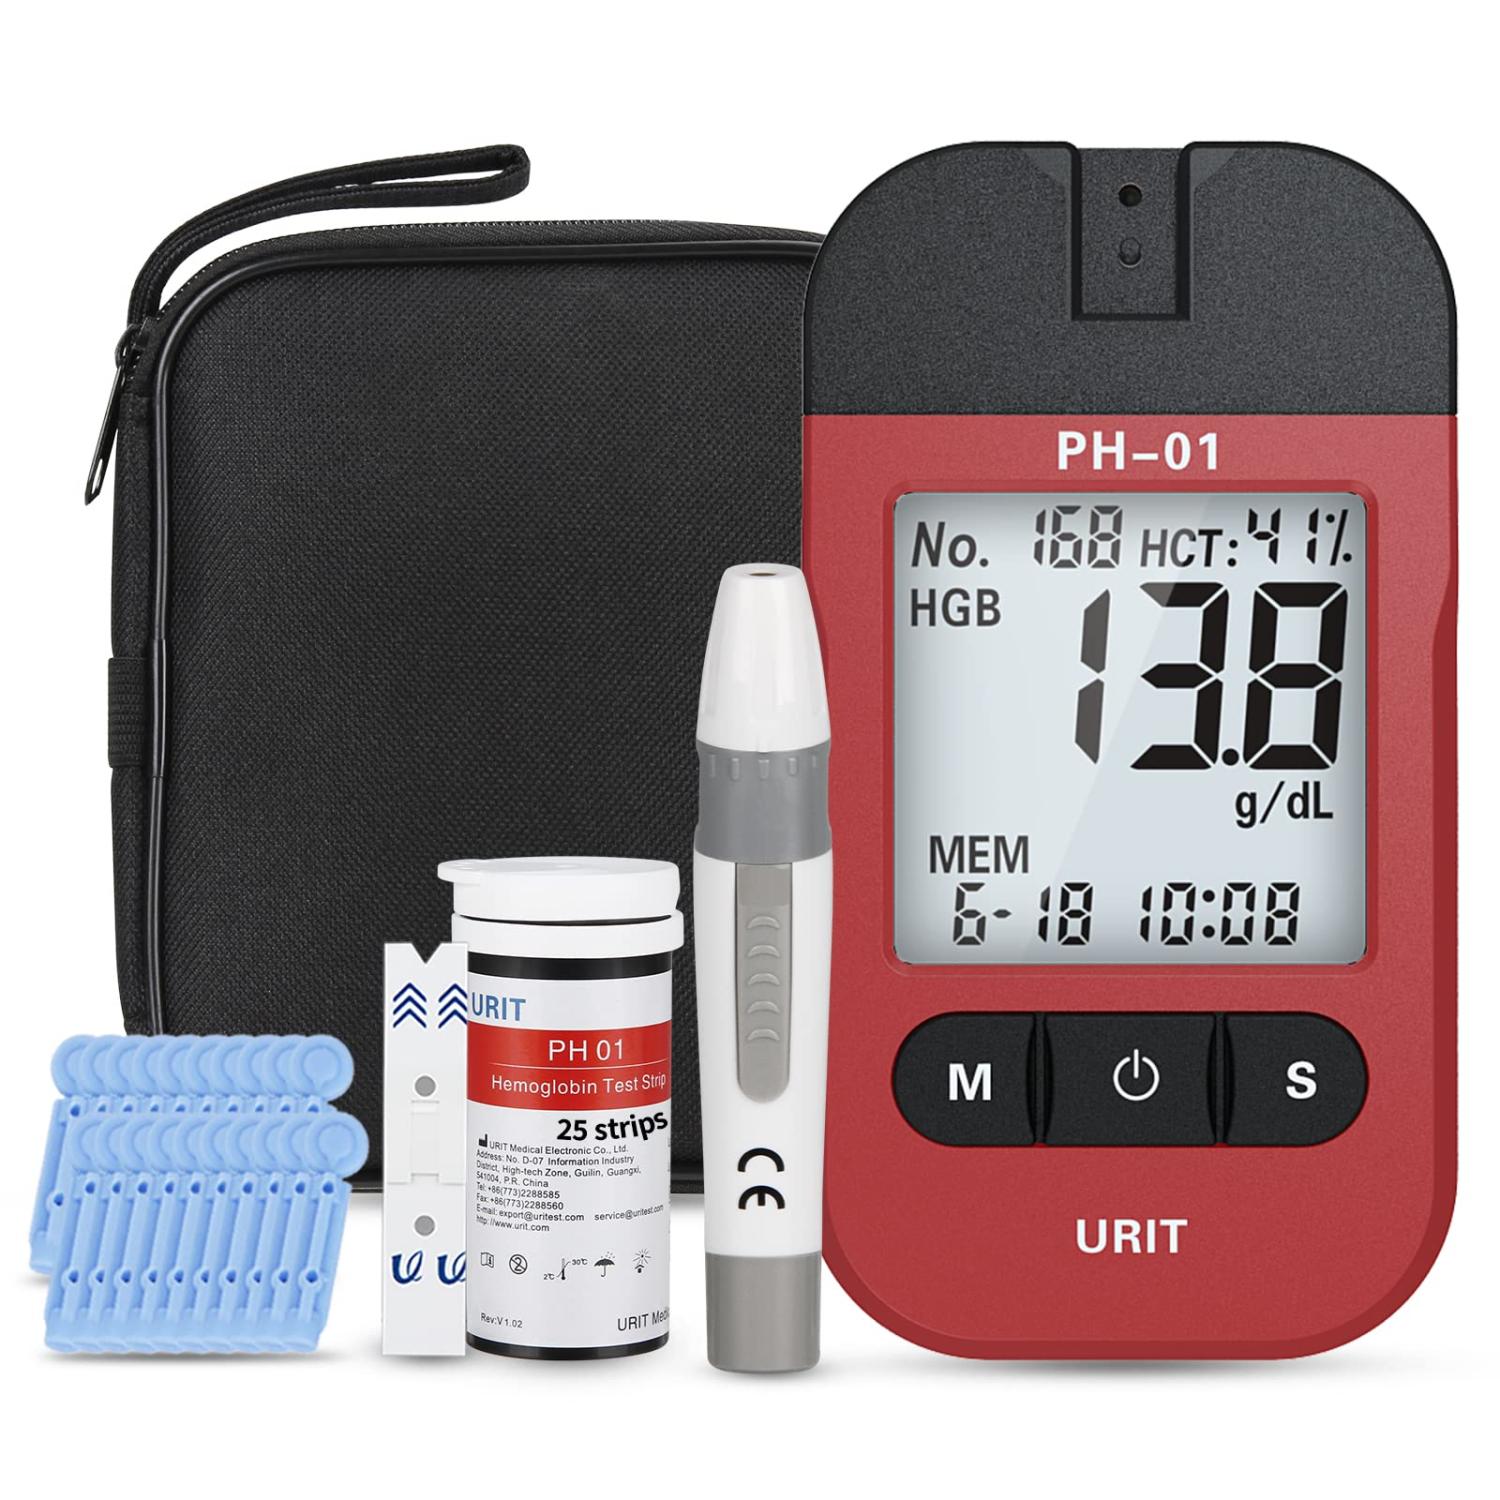 URIT Uric Acid Test Kit. Includes 25 Test Strips 25 Lacents